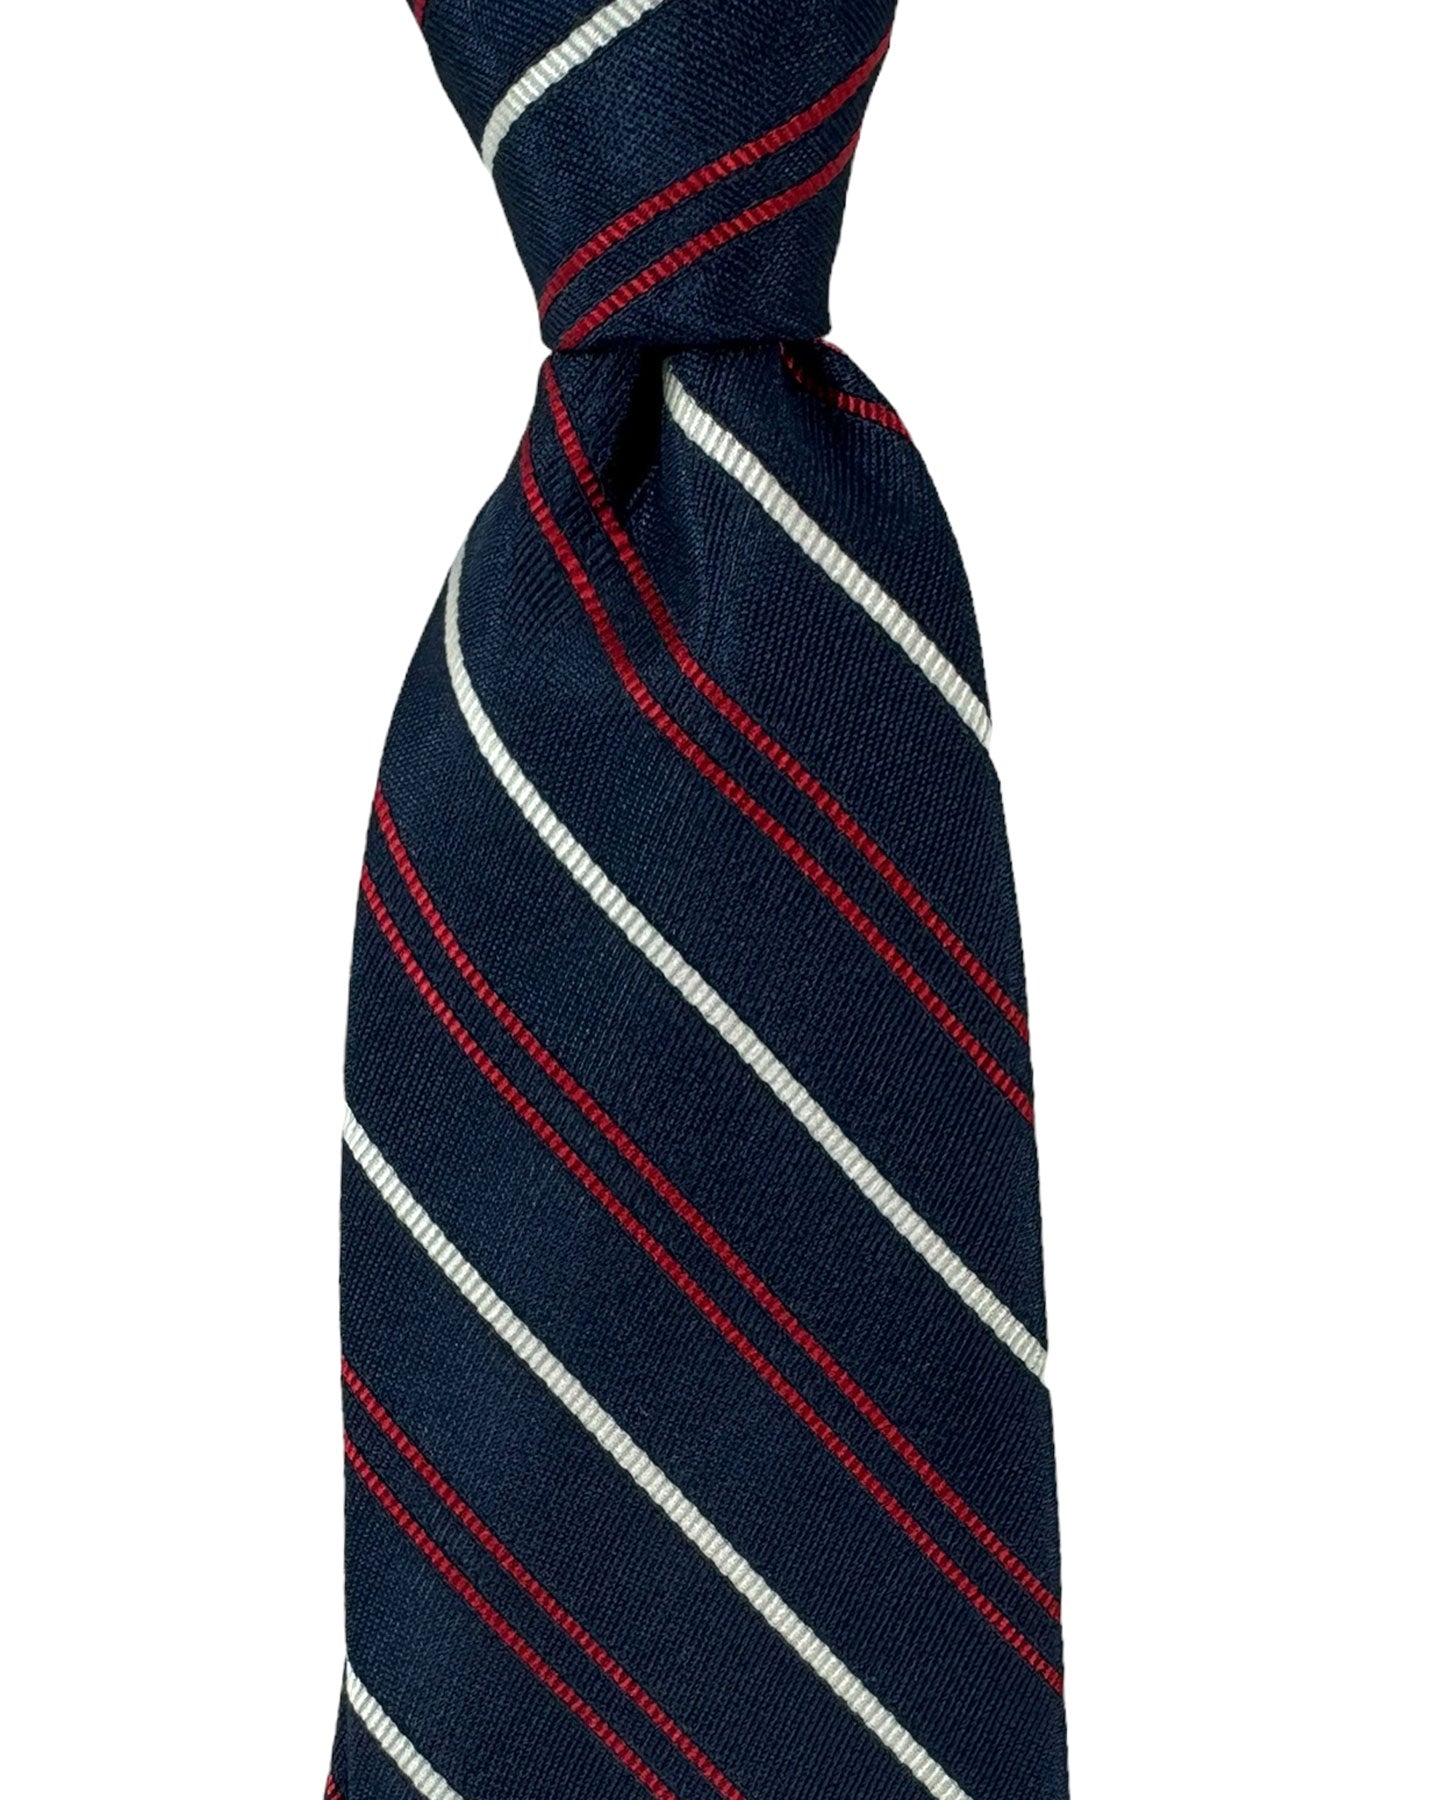 Barba Sevenfold Tie Navy Red Silver Stripes Design - Sartorial Neckwear